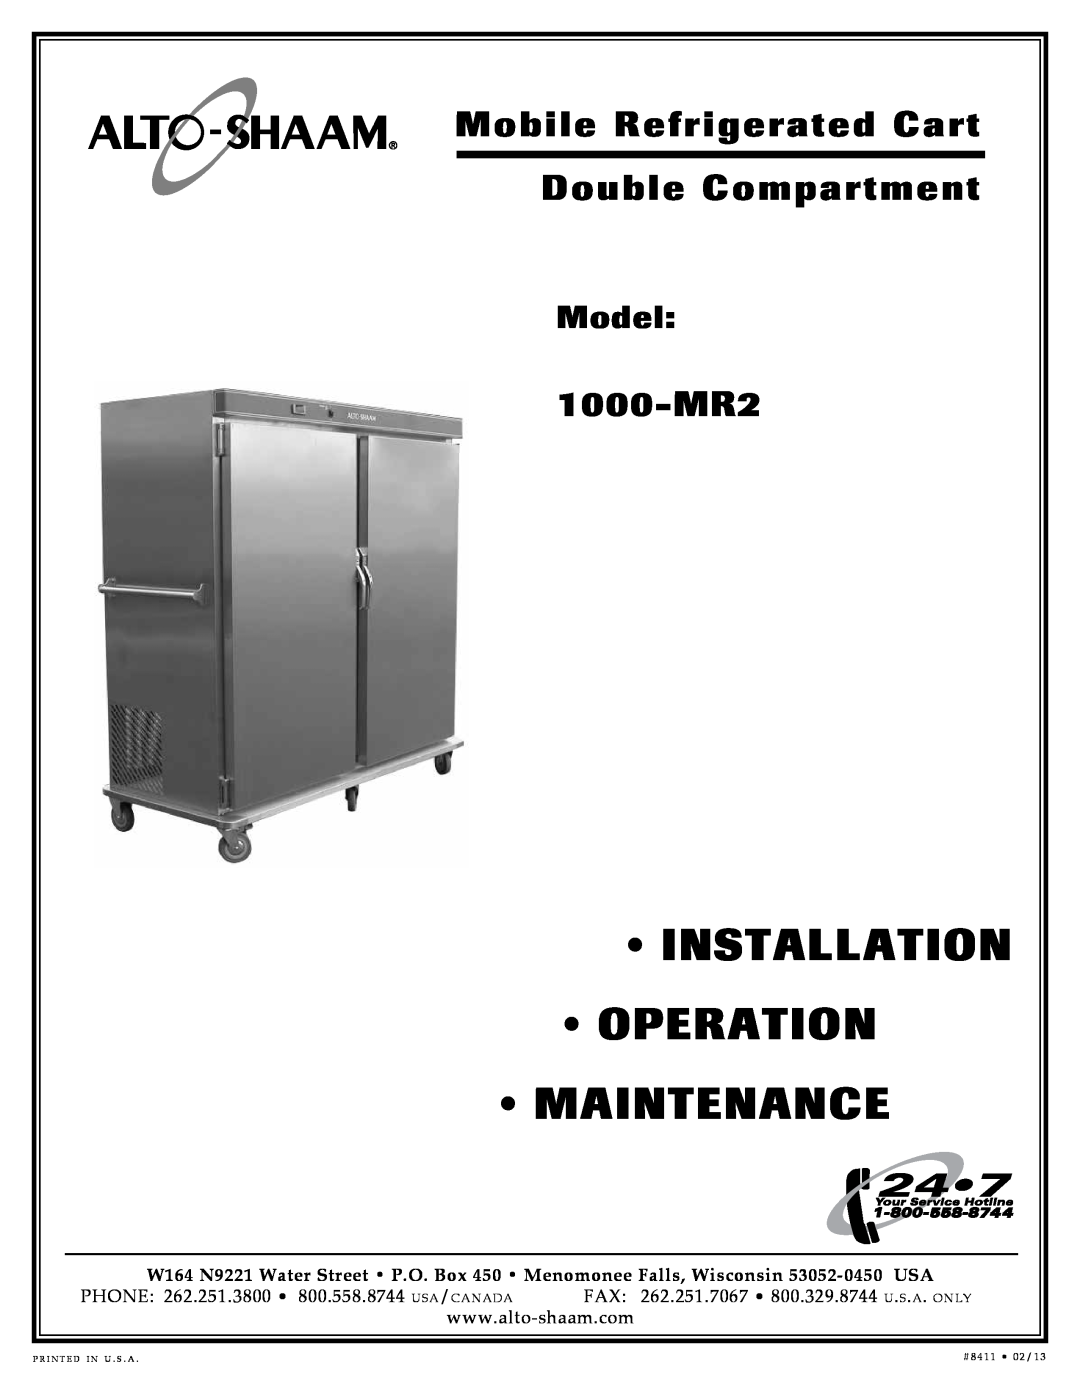 Alto-Shaam Mobile Refrigerated Cart manual Model, Installation Operation Maintenance, 1000-MR2, #8411 02/13 